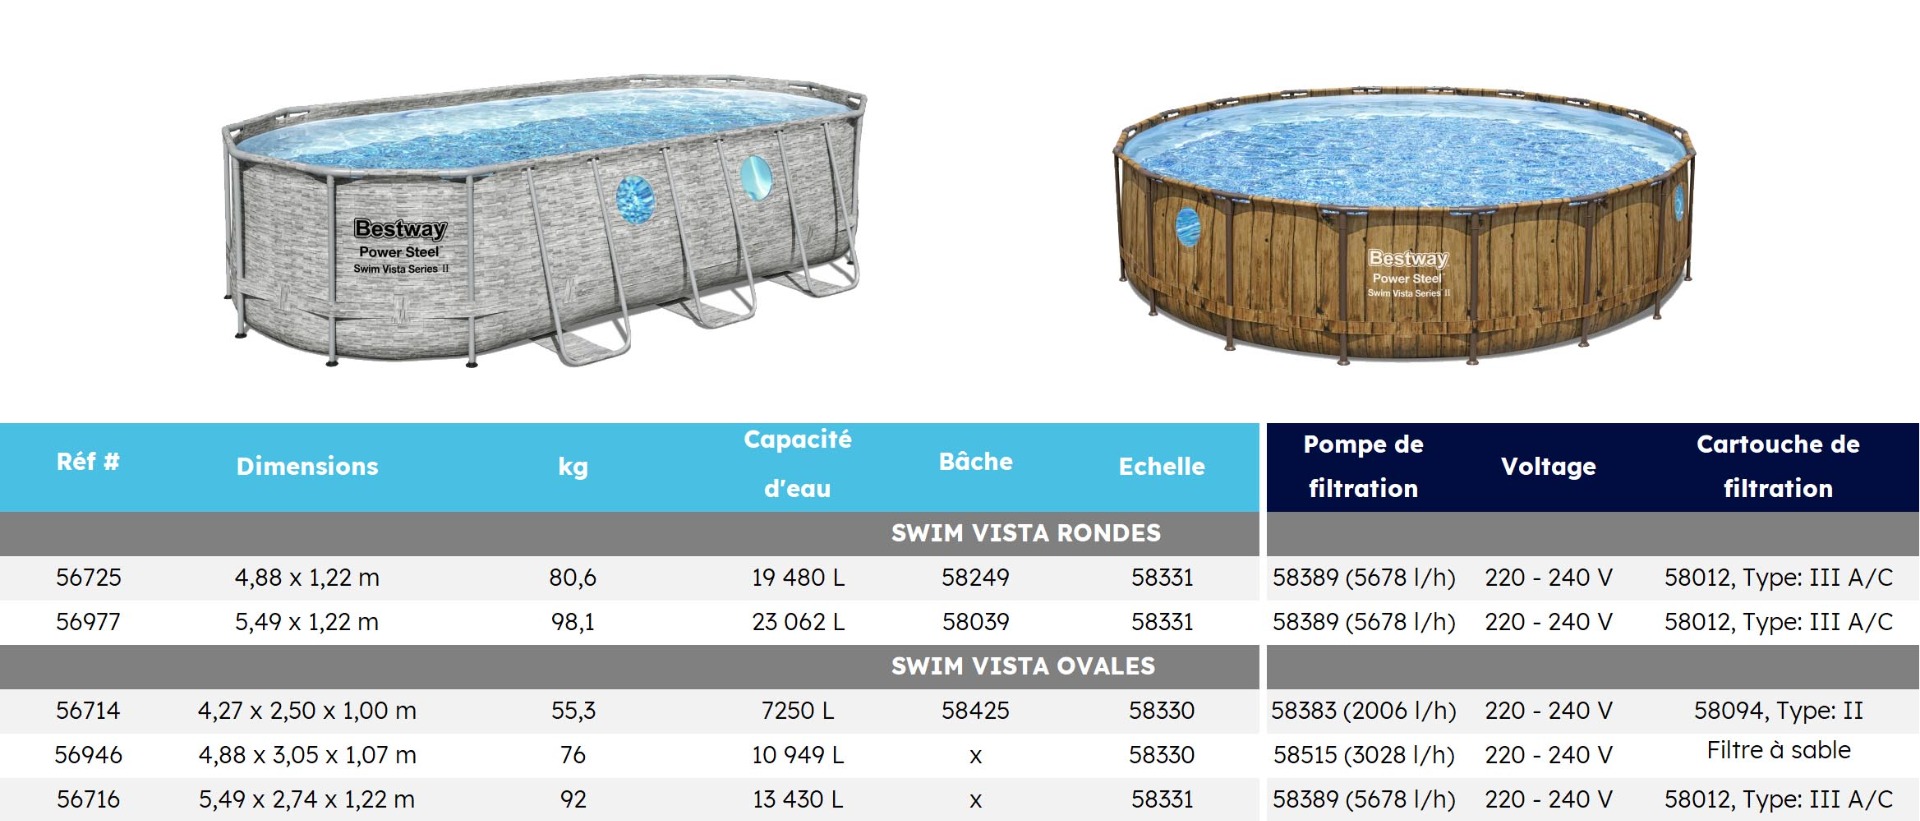 Dimensions des piscines Power Steel Bestway